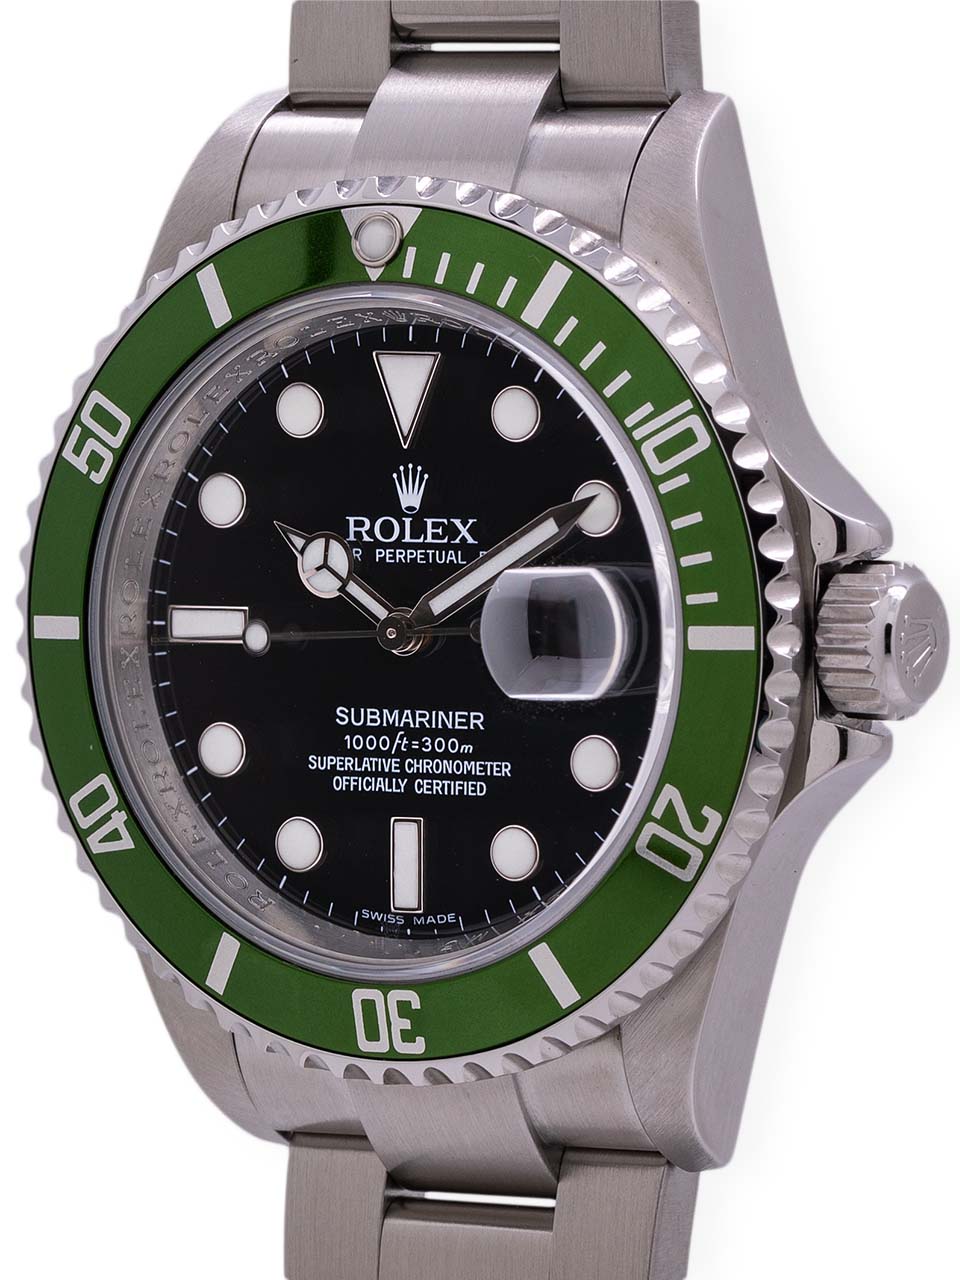 Rolex Submariner Kermit Oval O, MK1 dial, F-series – Newyorkwatchgallery